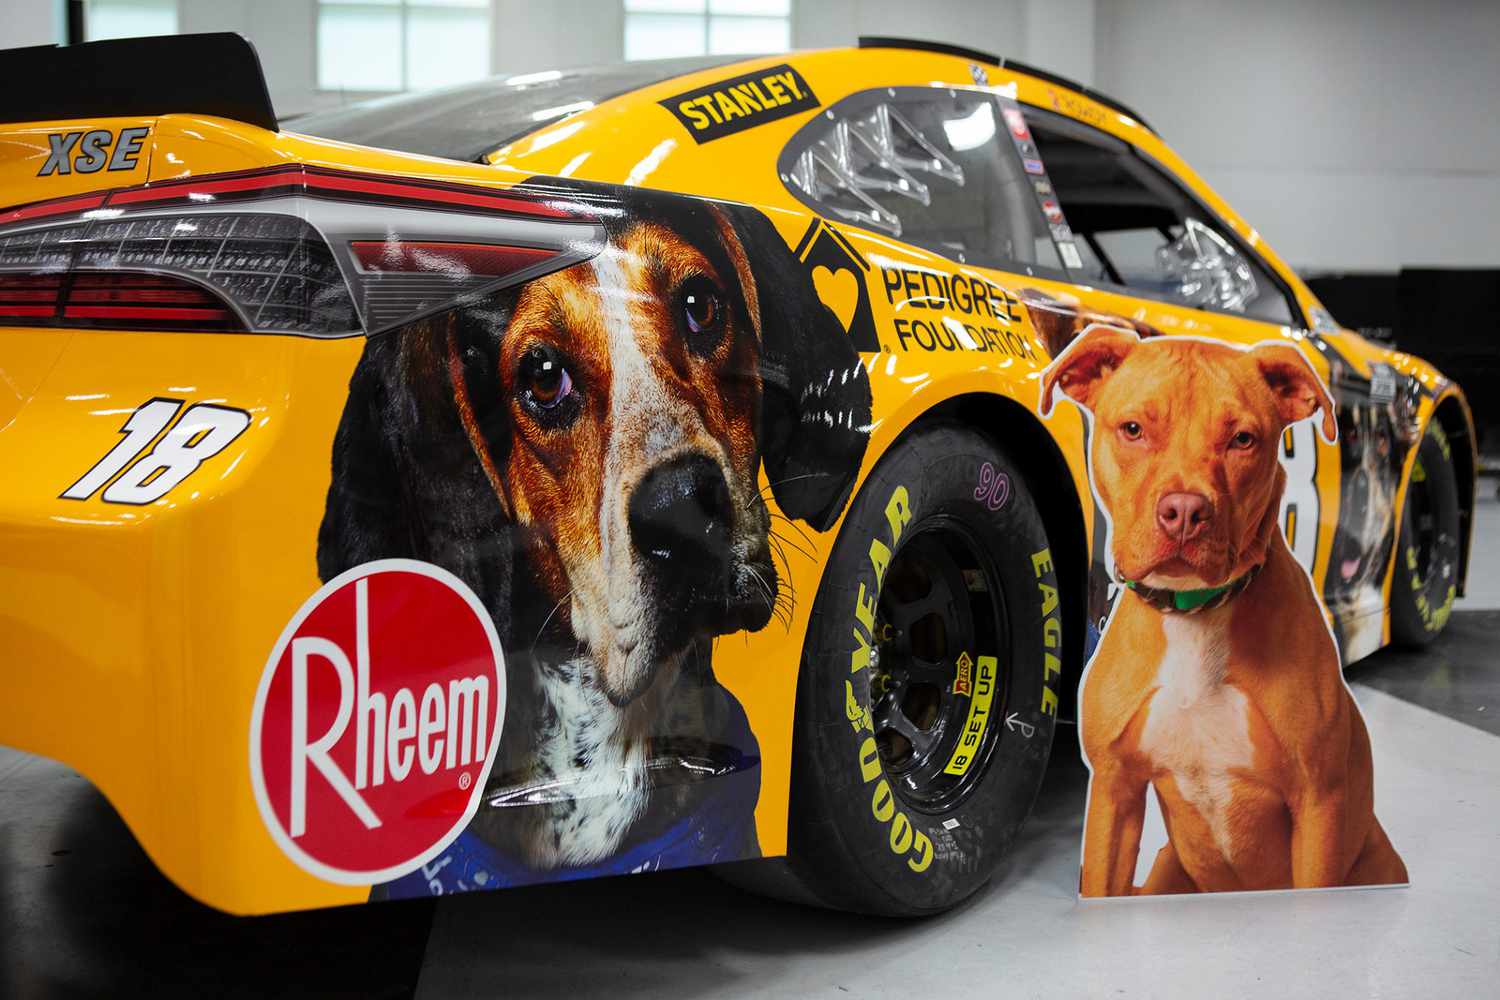 new NASCAR car design using dogs